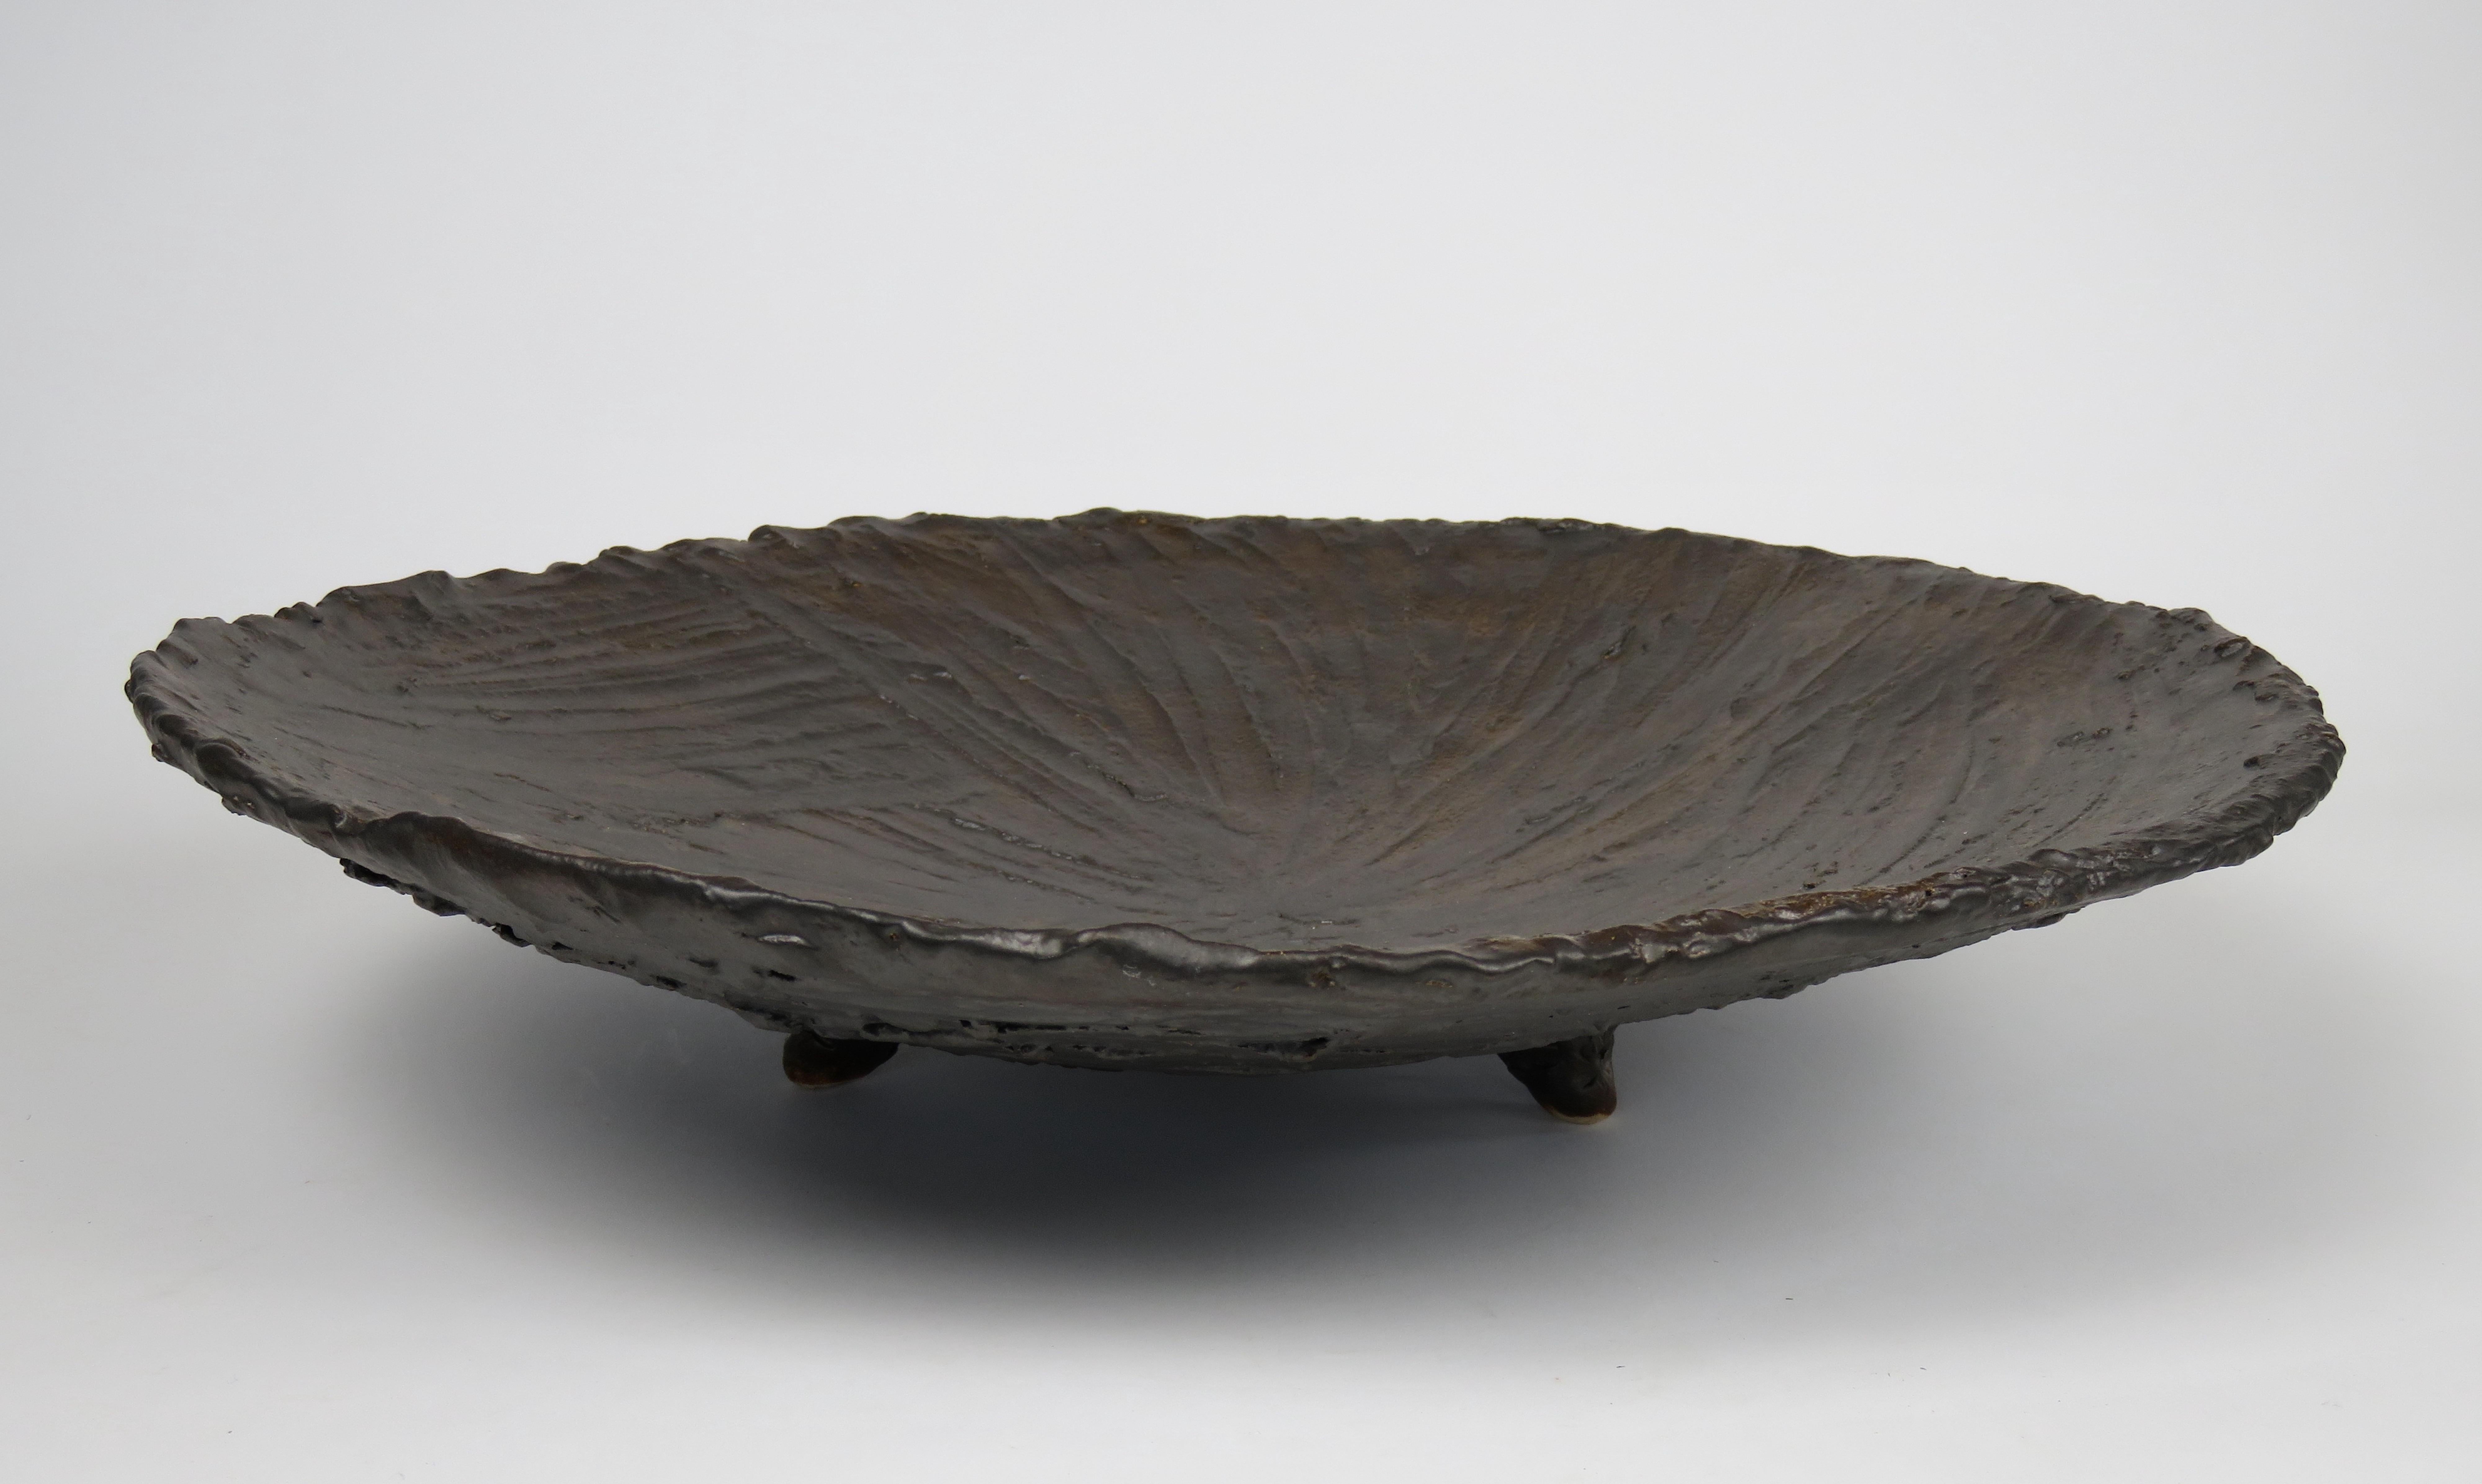 Glazed Large Textured Ceramic Bowl on Tripod Feet in Brown/Metallic Glaze Hand Built